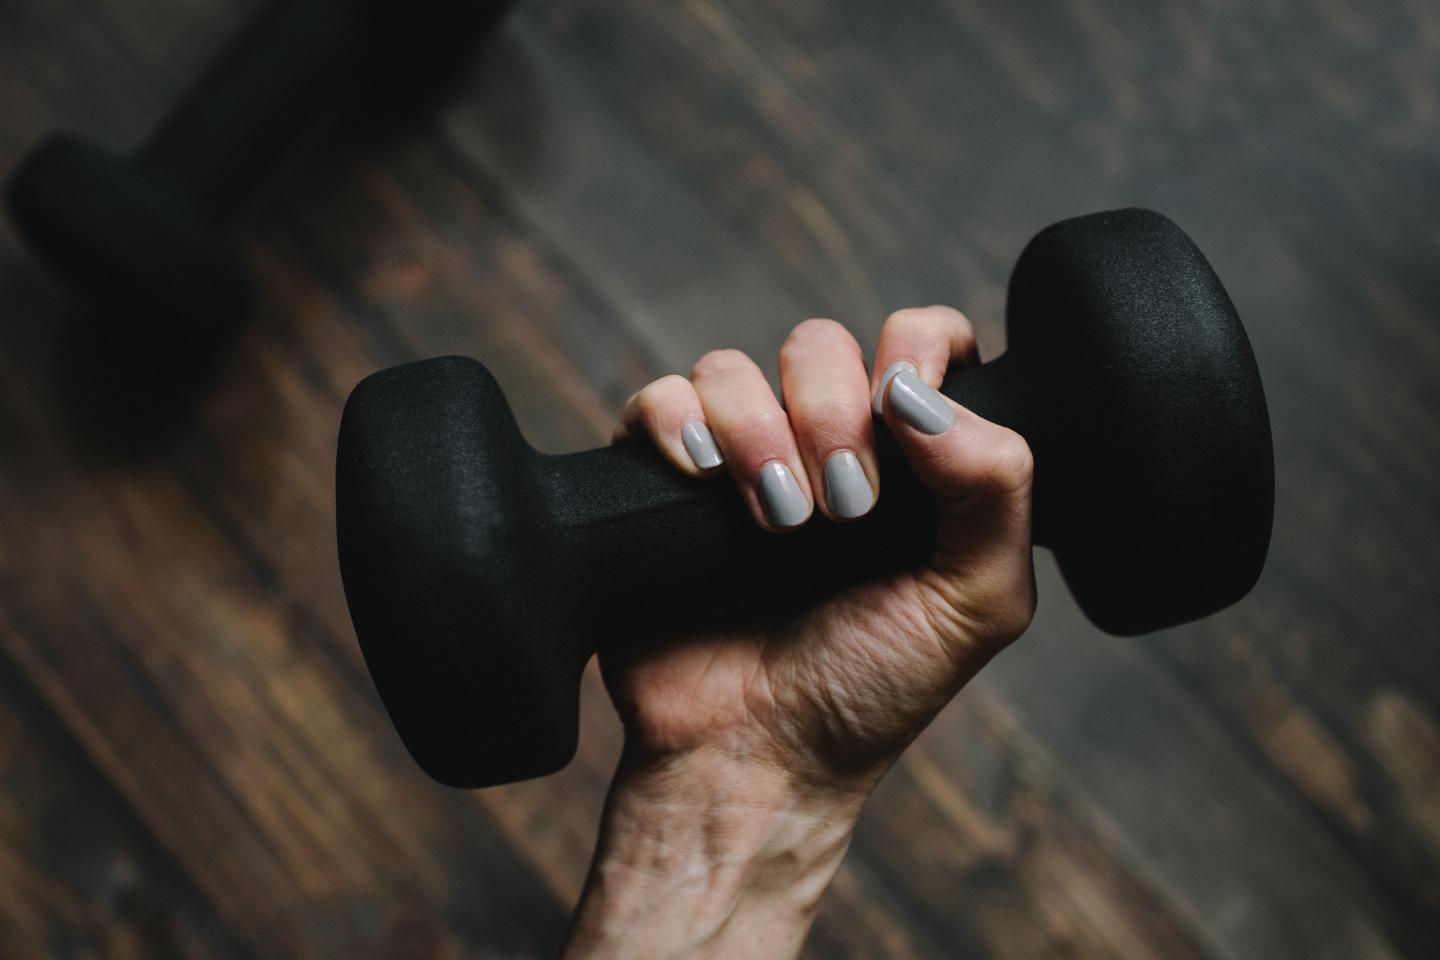 Exercising One Arm Has Twice the Benefits